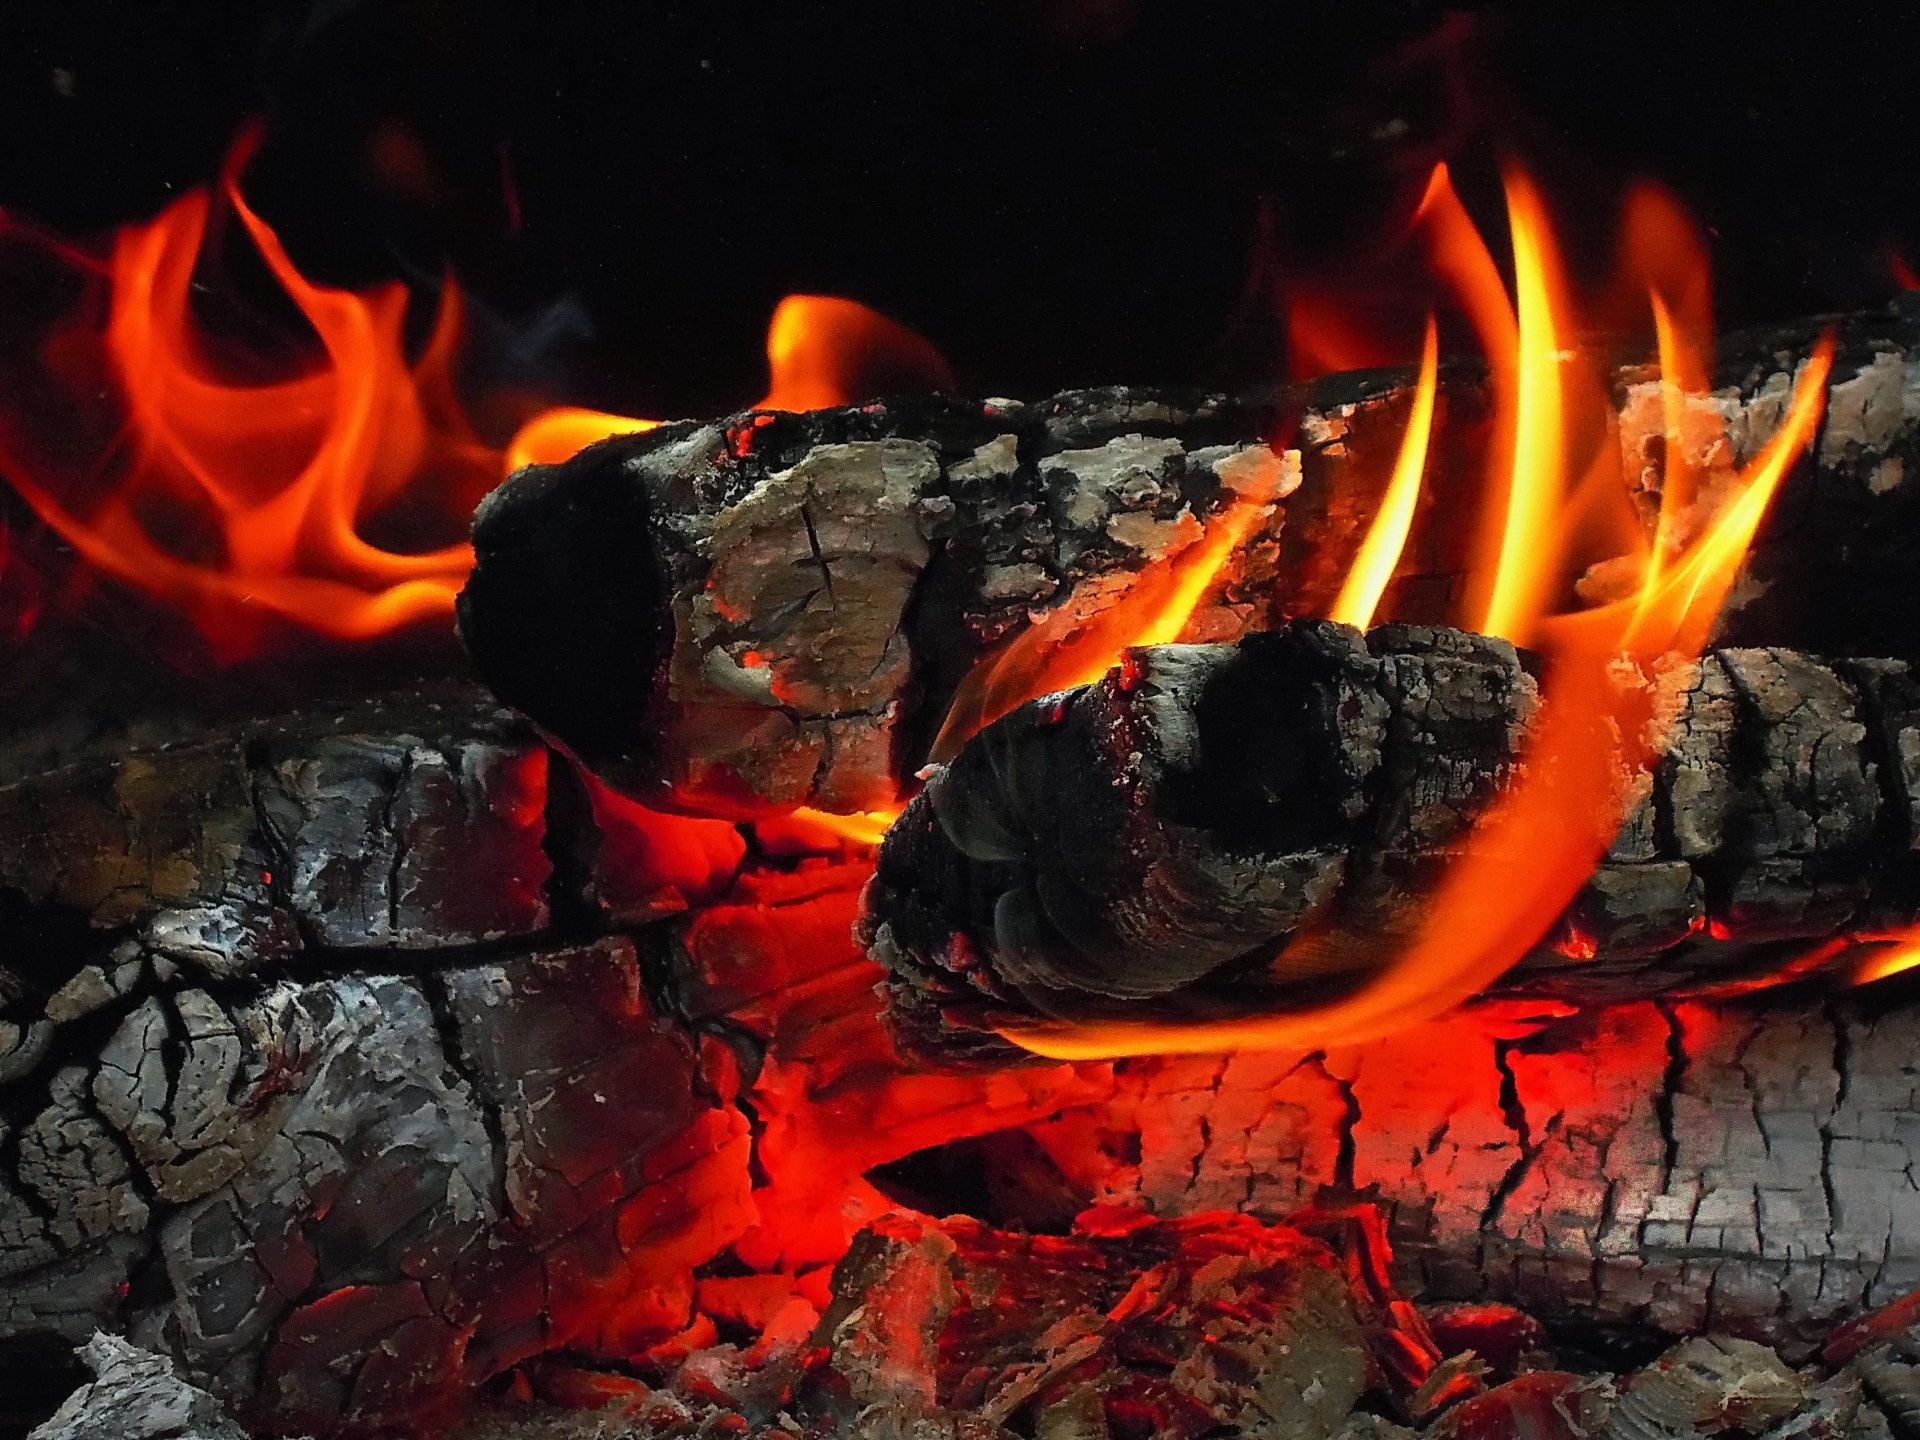 Fire wallpapers, Fiery backgrounds, Hot flames, Burning intensity, Dynamic visuals, 1920x1440 HD Desktop